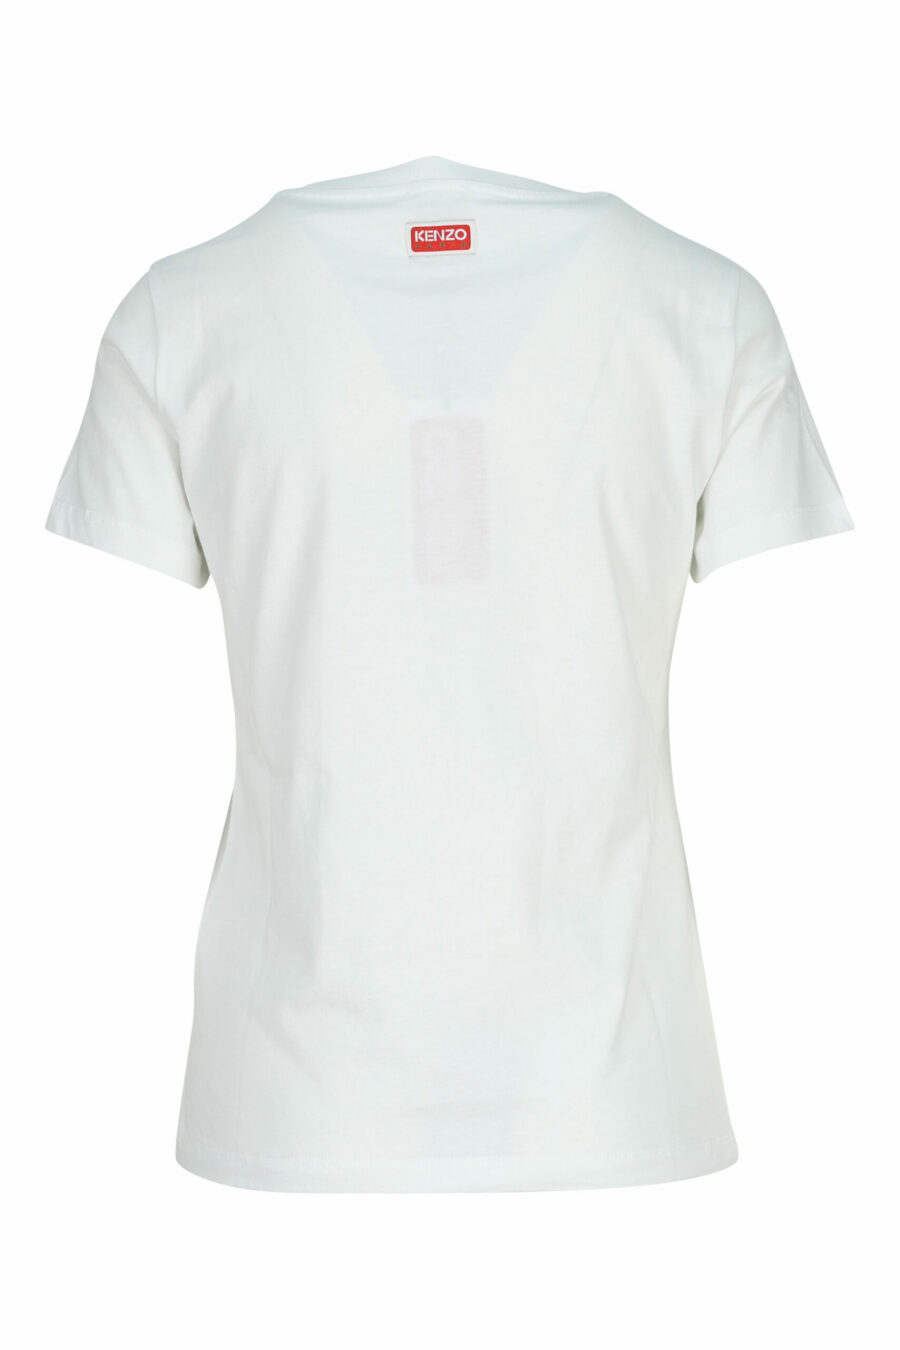 Camiseta blanca con minilogo "kenzo elephant" - 3612230620117 1 scaled